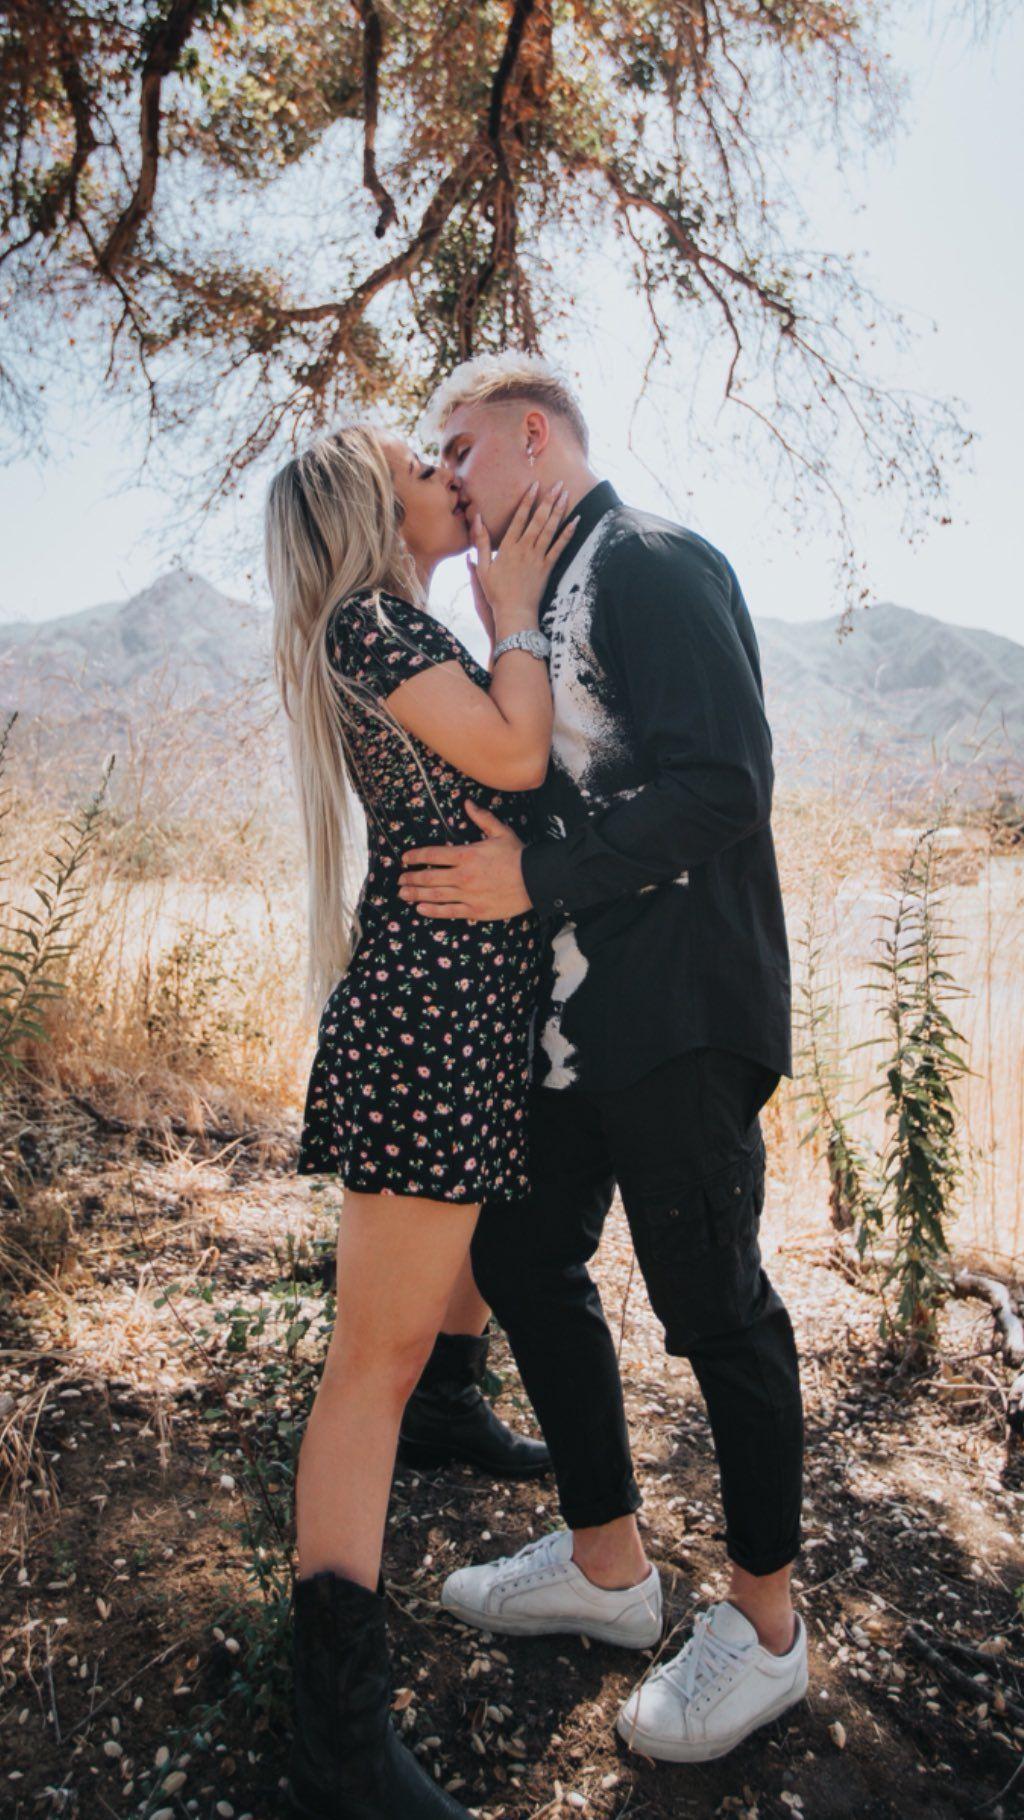 Warning ⚠️YouTubers Jake Paul and Tana Mongeau's Engagement Pics